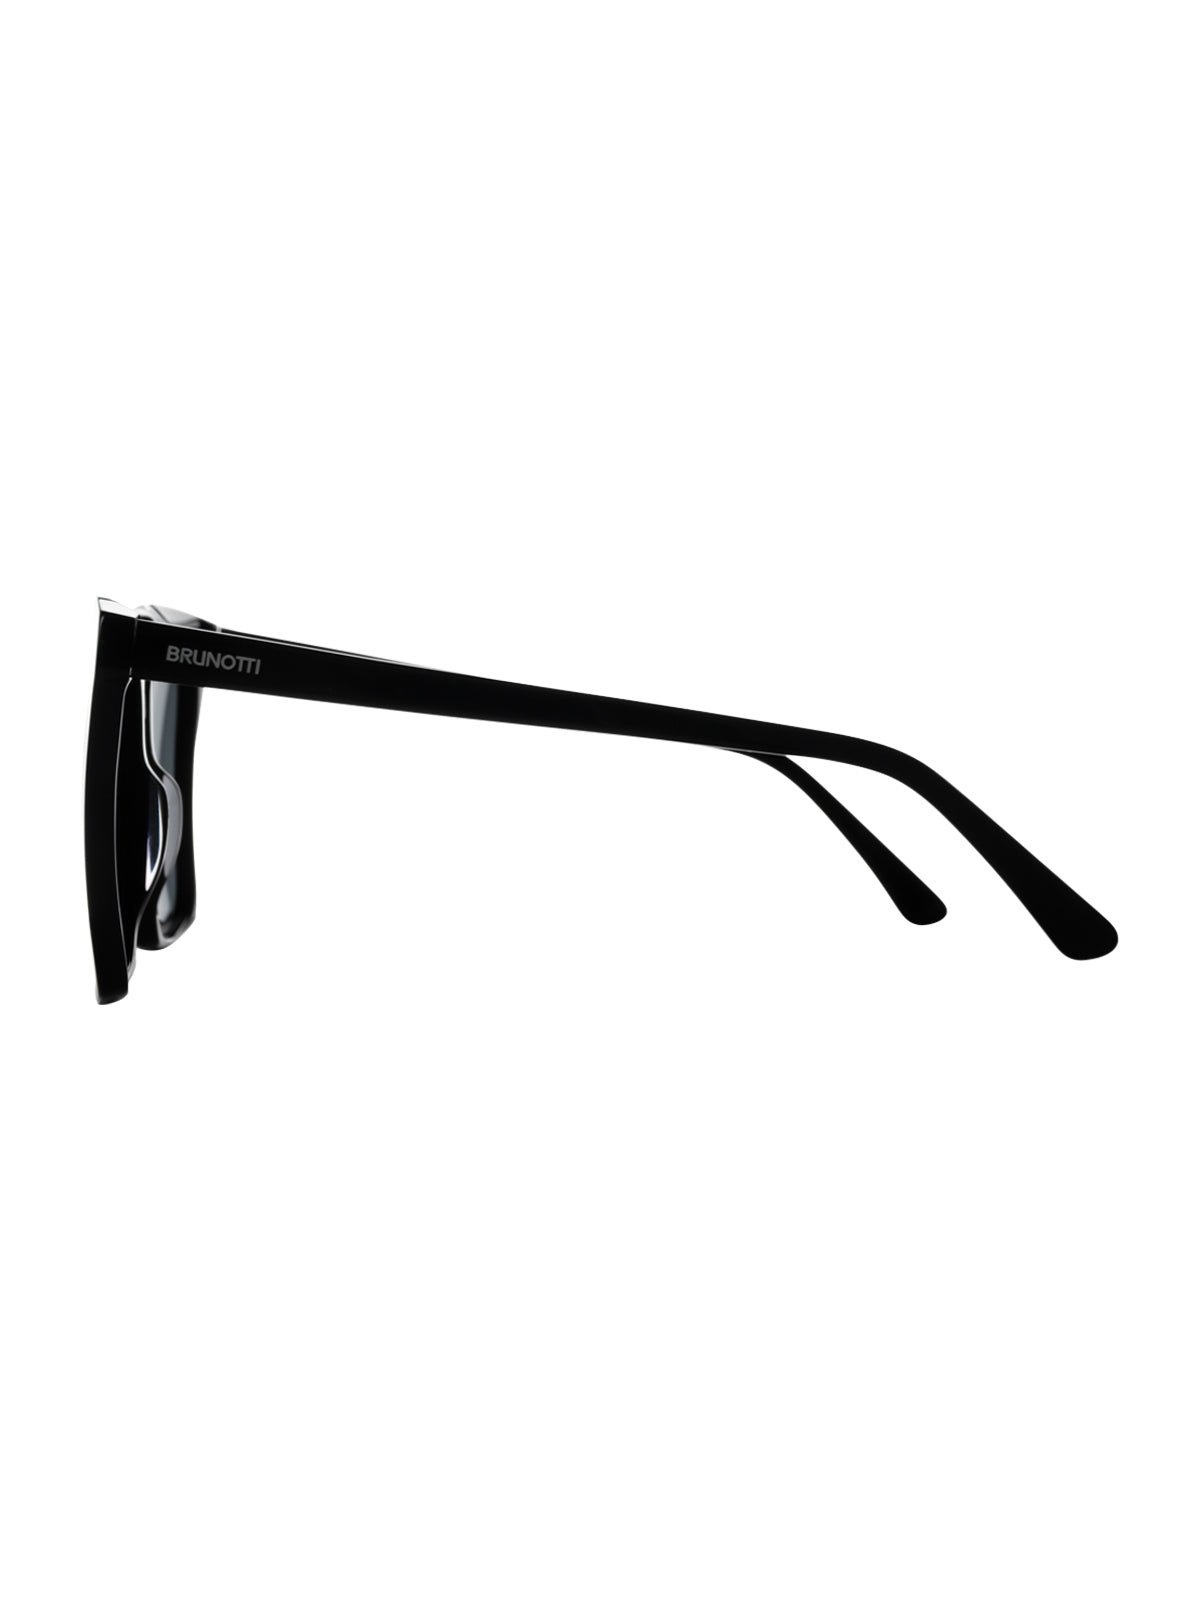 Amy Unisex Sunglasses | Black